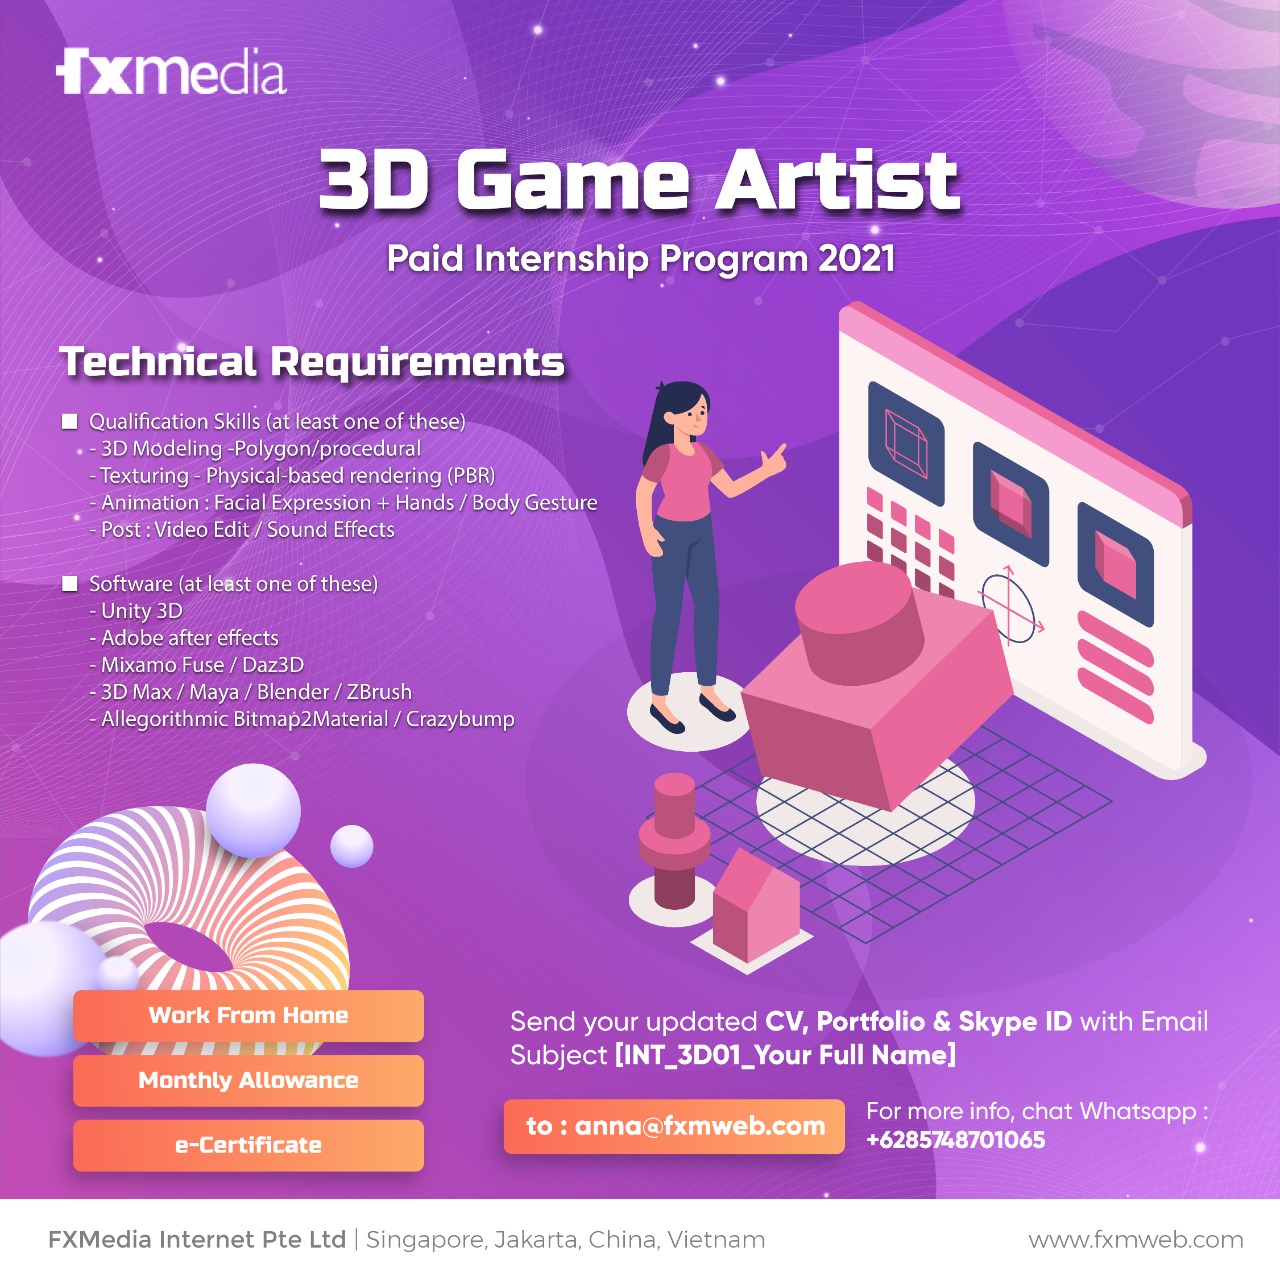 FXMedia Paid Internship Program – 3D Game Artist